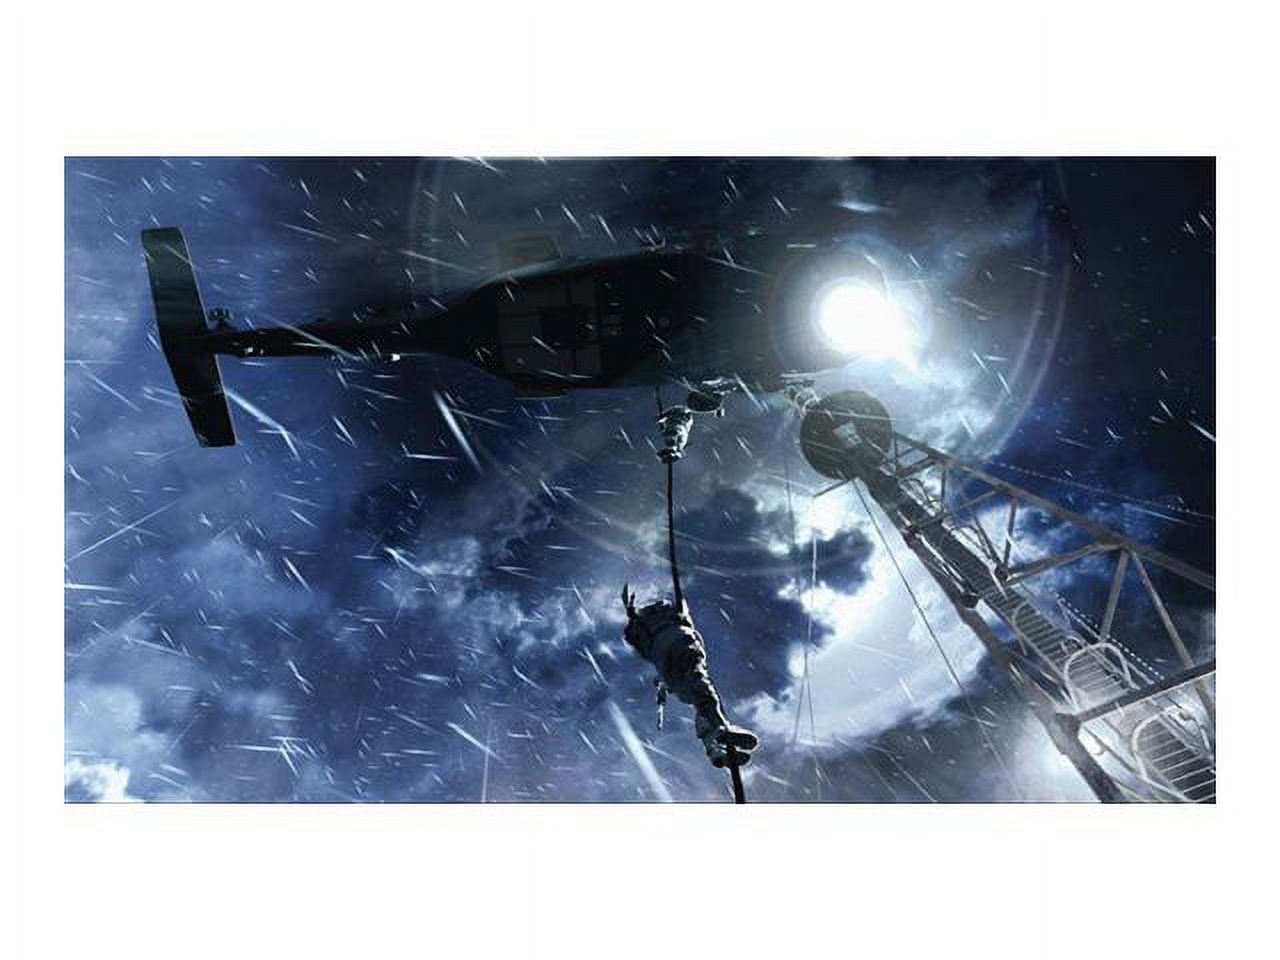 Call of Duty 4: Modern Warfare, Activision, PlayStation 3, 047875840591 - image 5 of 5